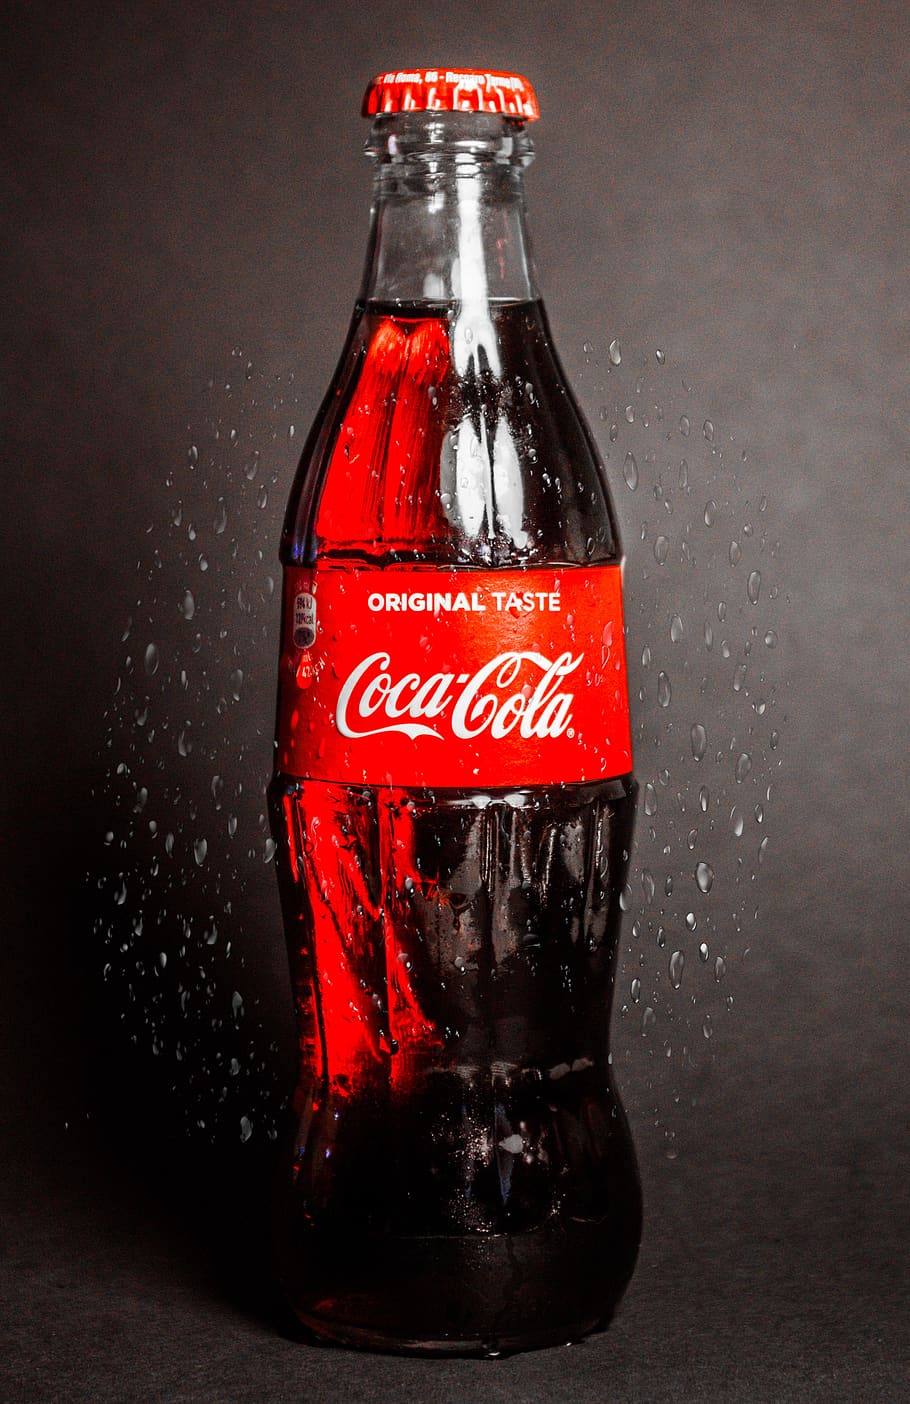 Coca cola glass bottle label template - misterfaher